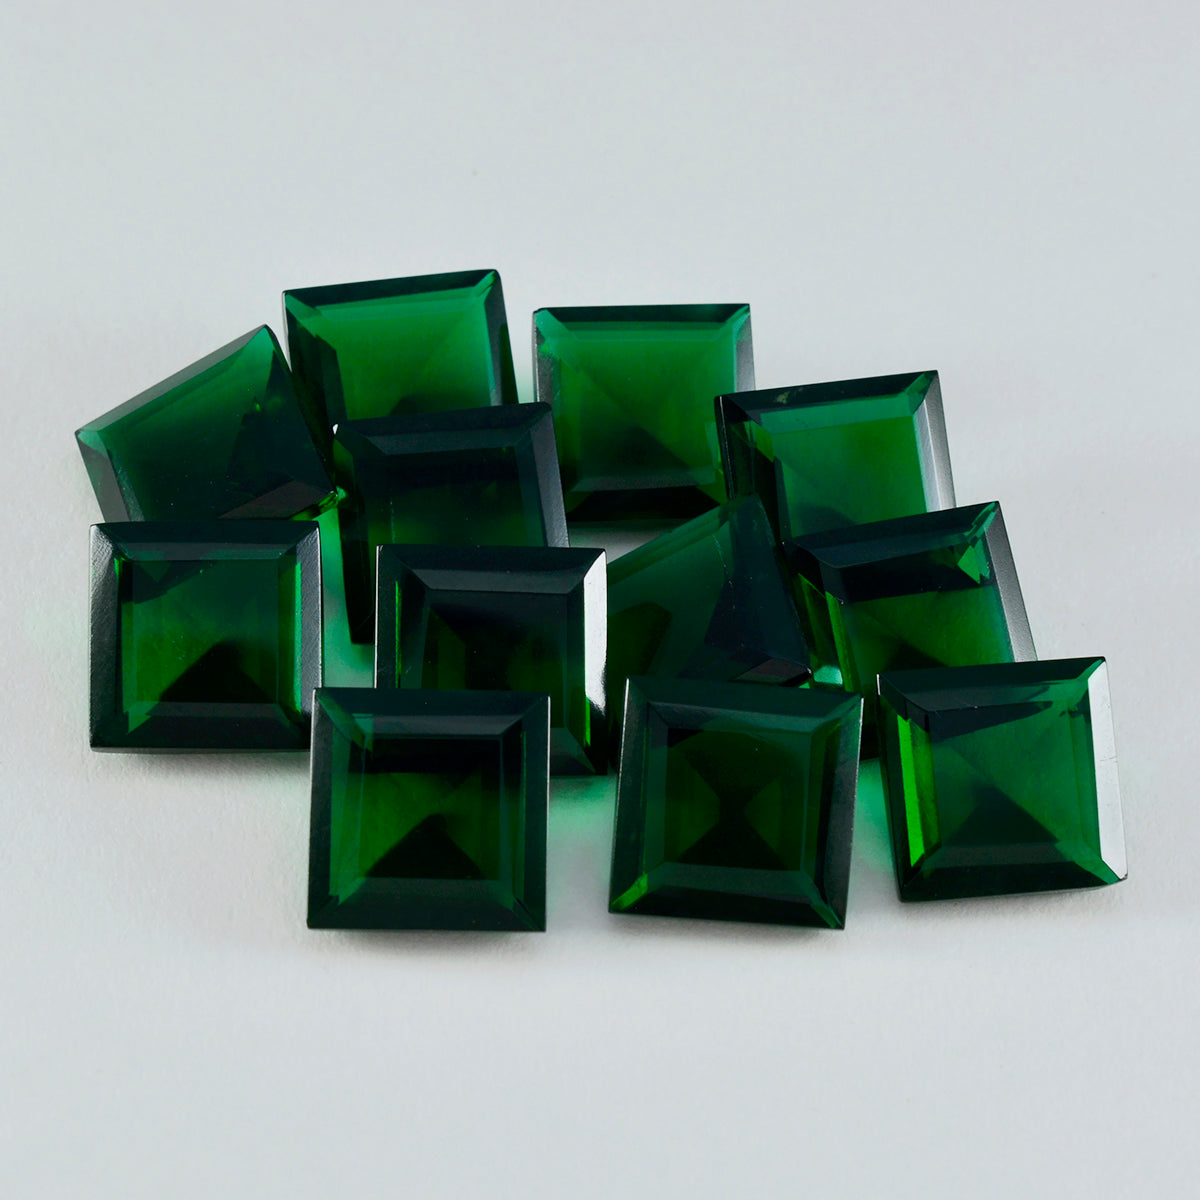 riyogems 1pc グリーン エメラルド CZ ファセット 12x12 mm 正方形の形状の素晴らしい品質のルース宝石